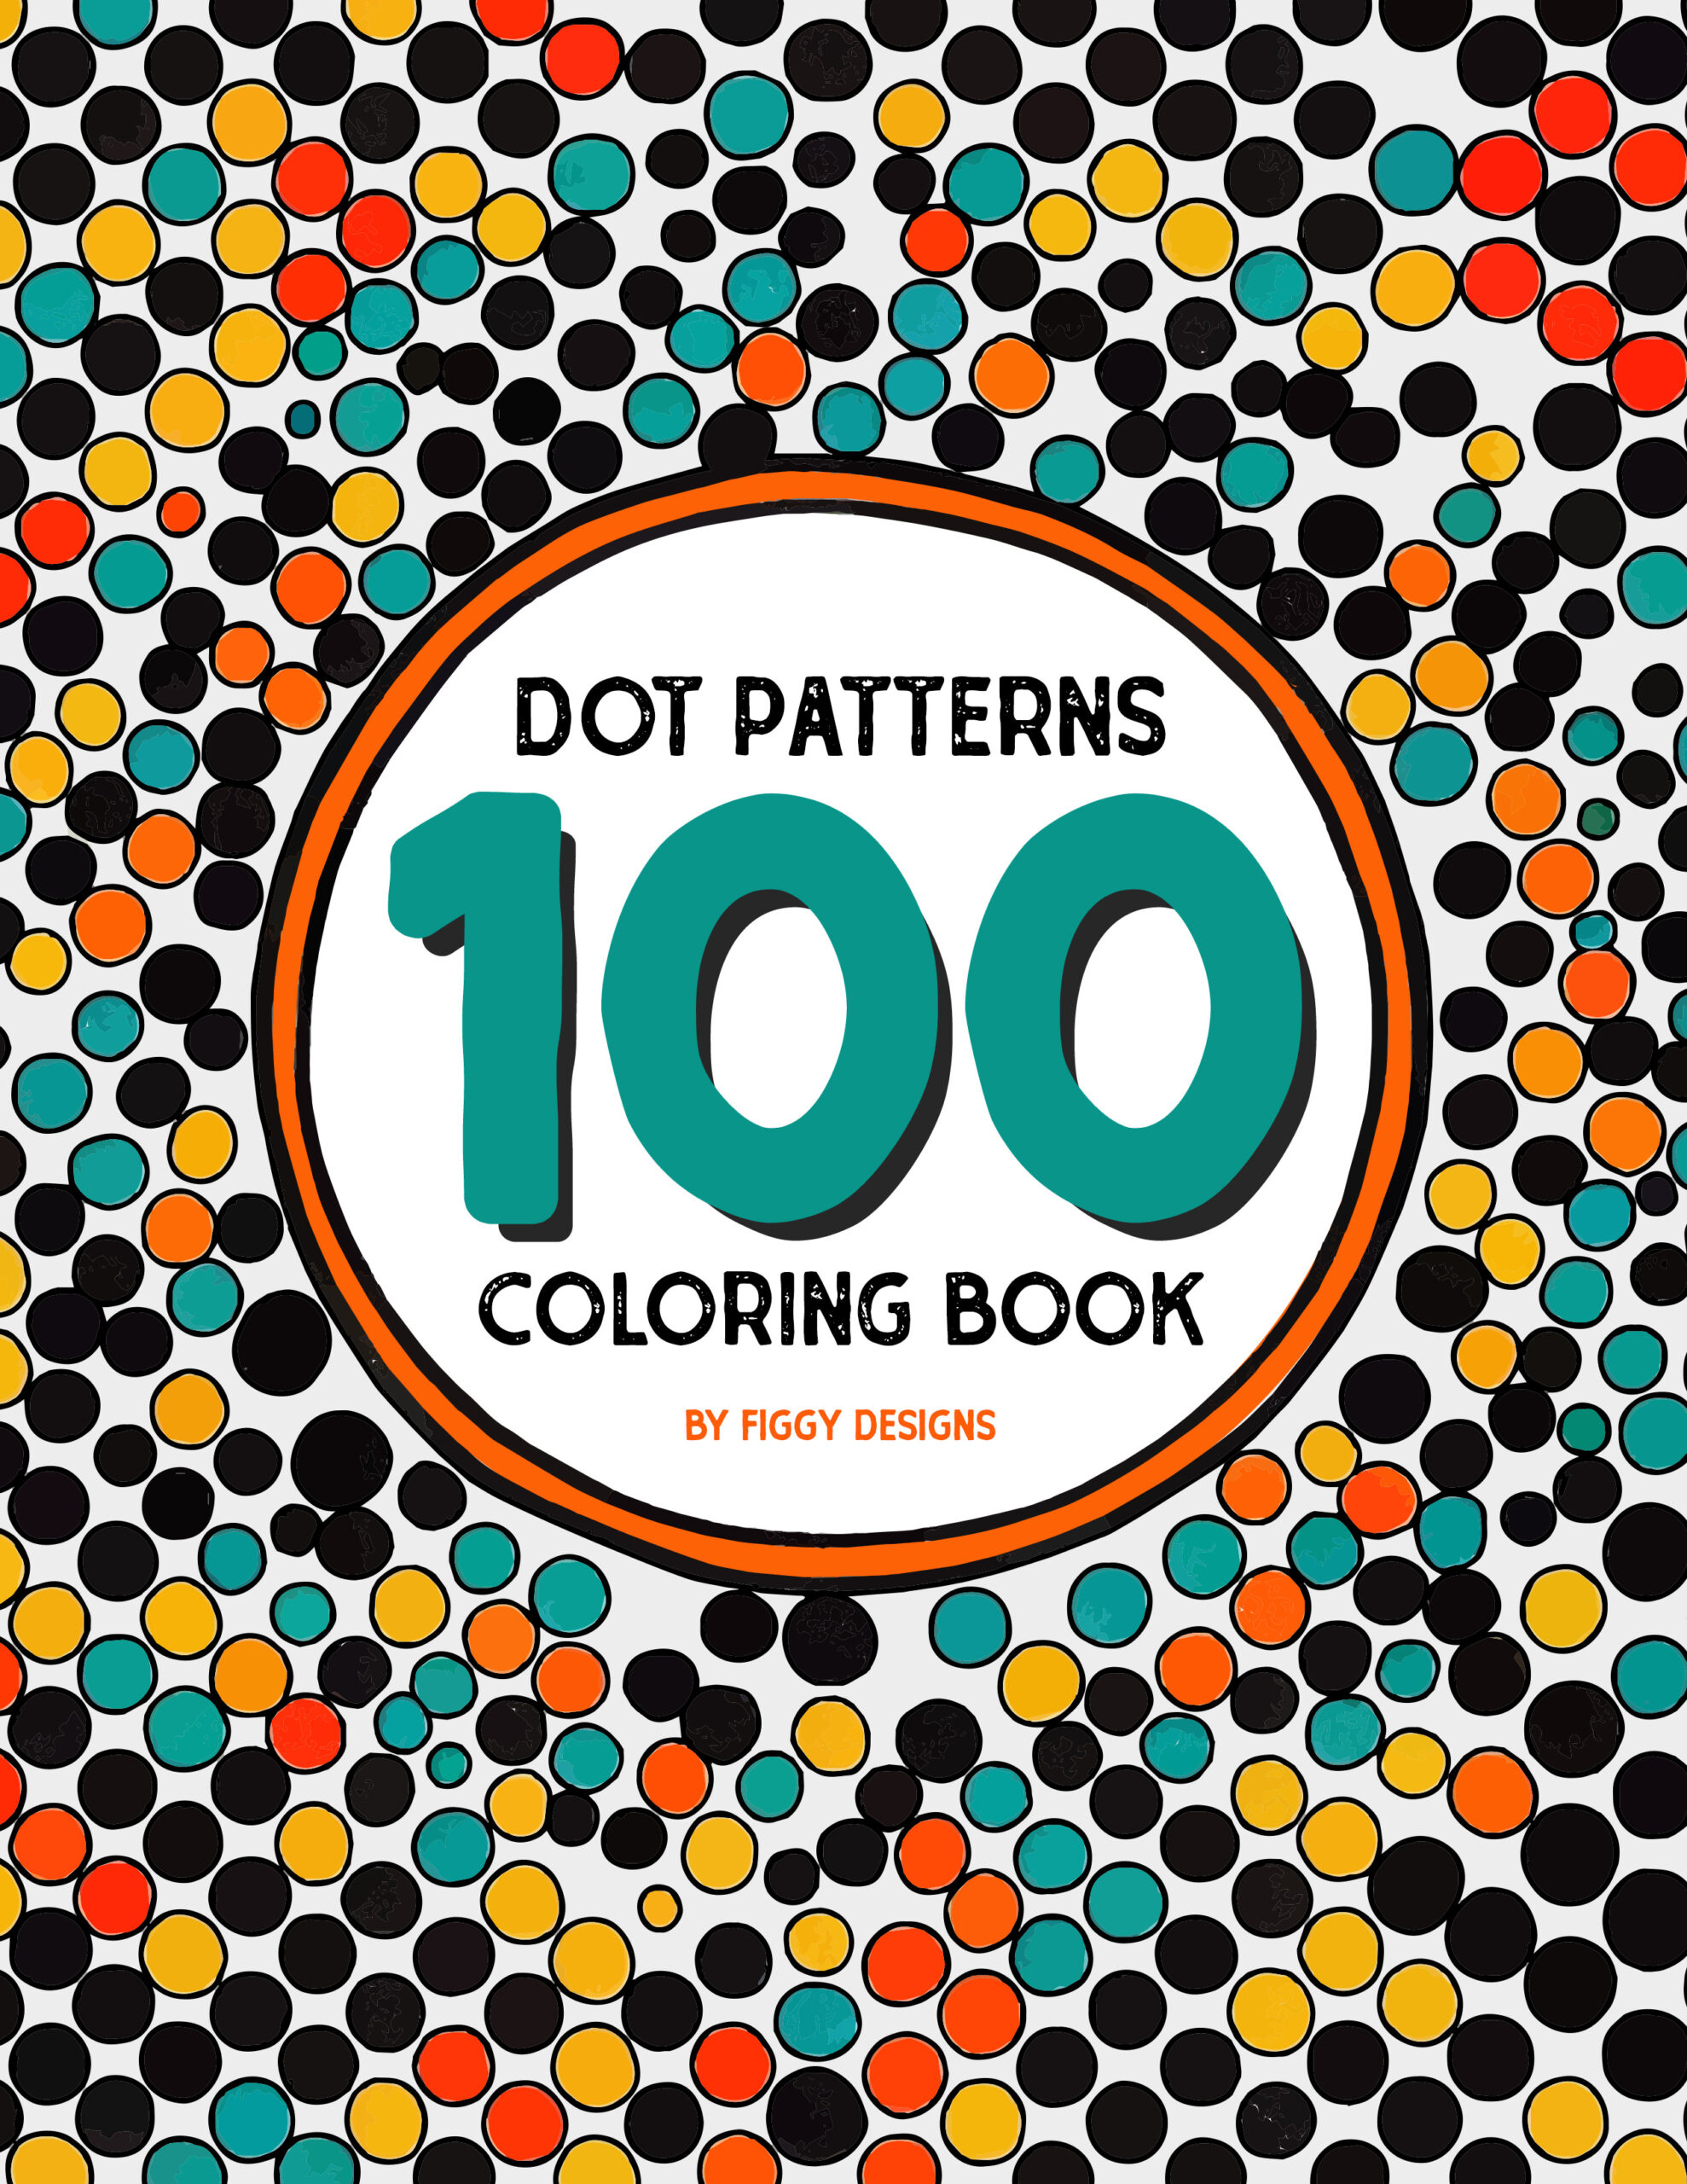 100 Dot Patterns Coloring Book